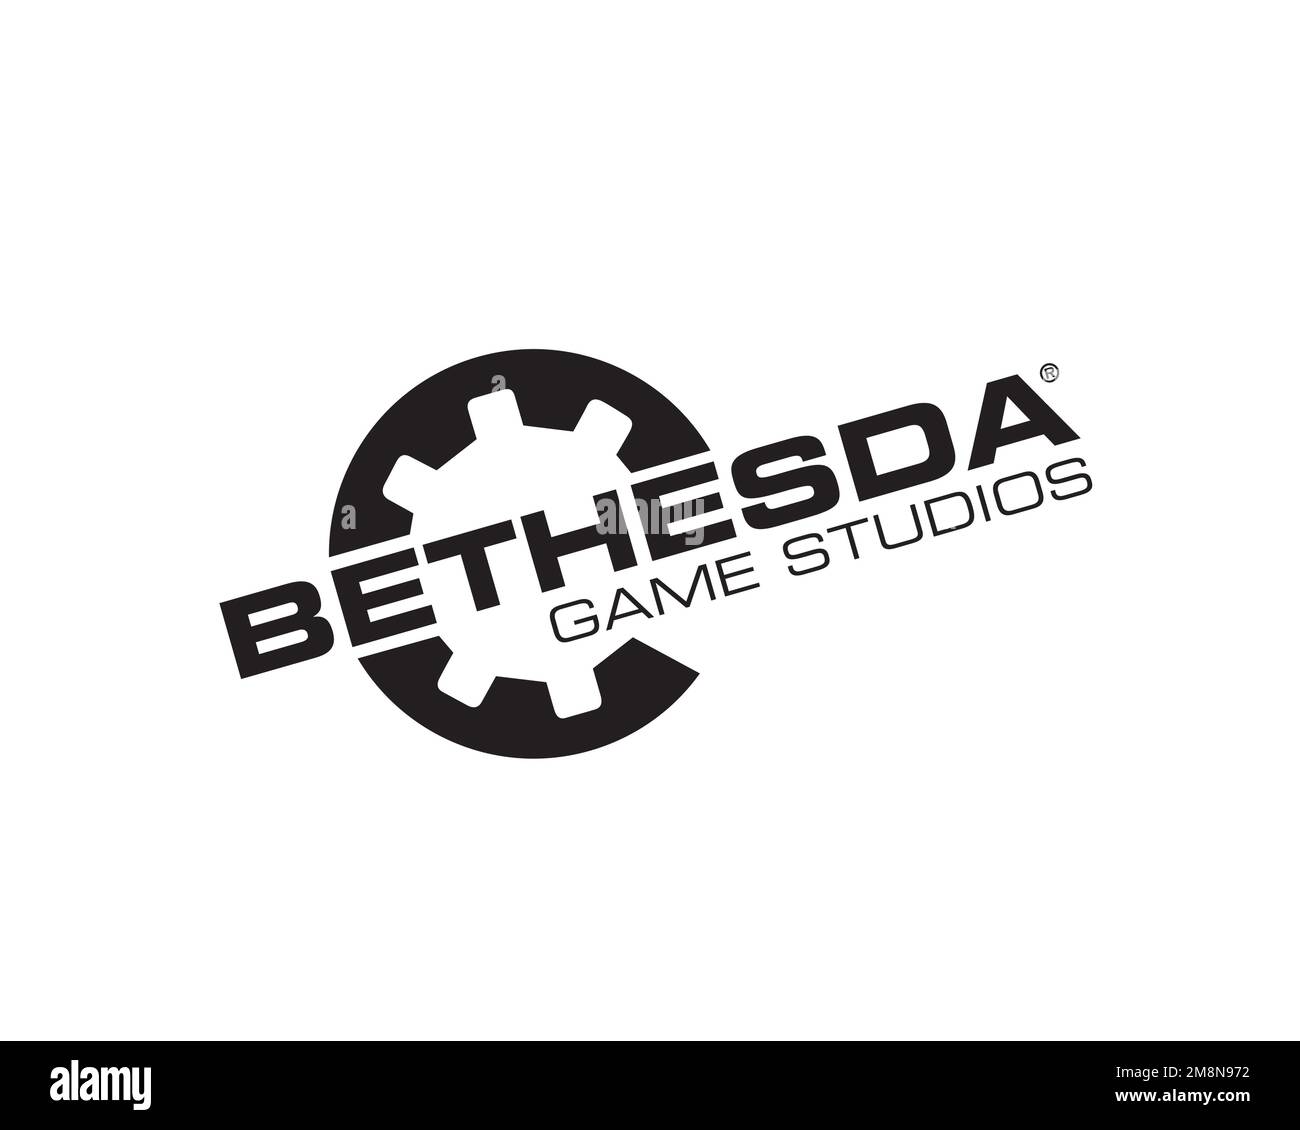 Bethesda Game Studios Dallas, logo ruotato, sfondo bianco Foto Stock